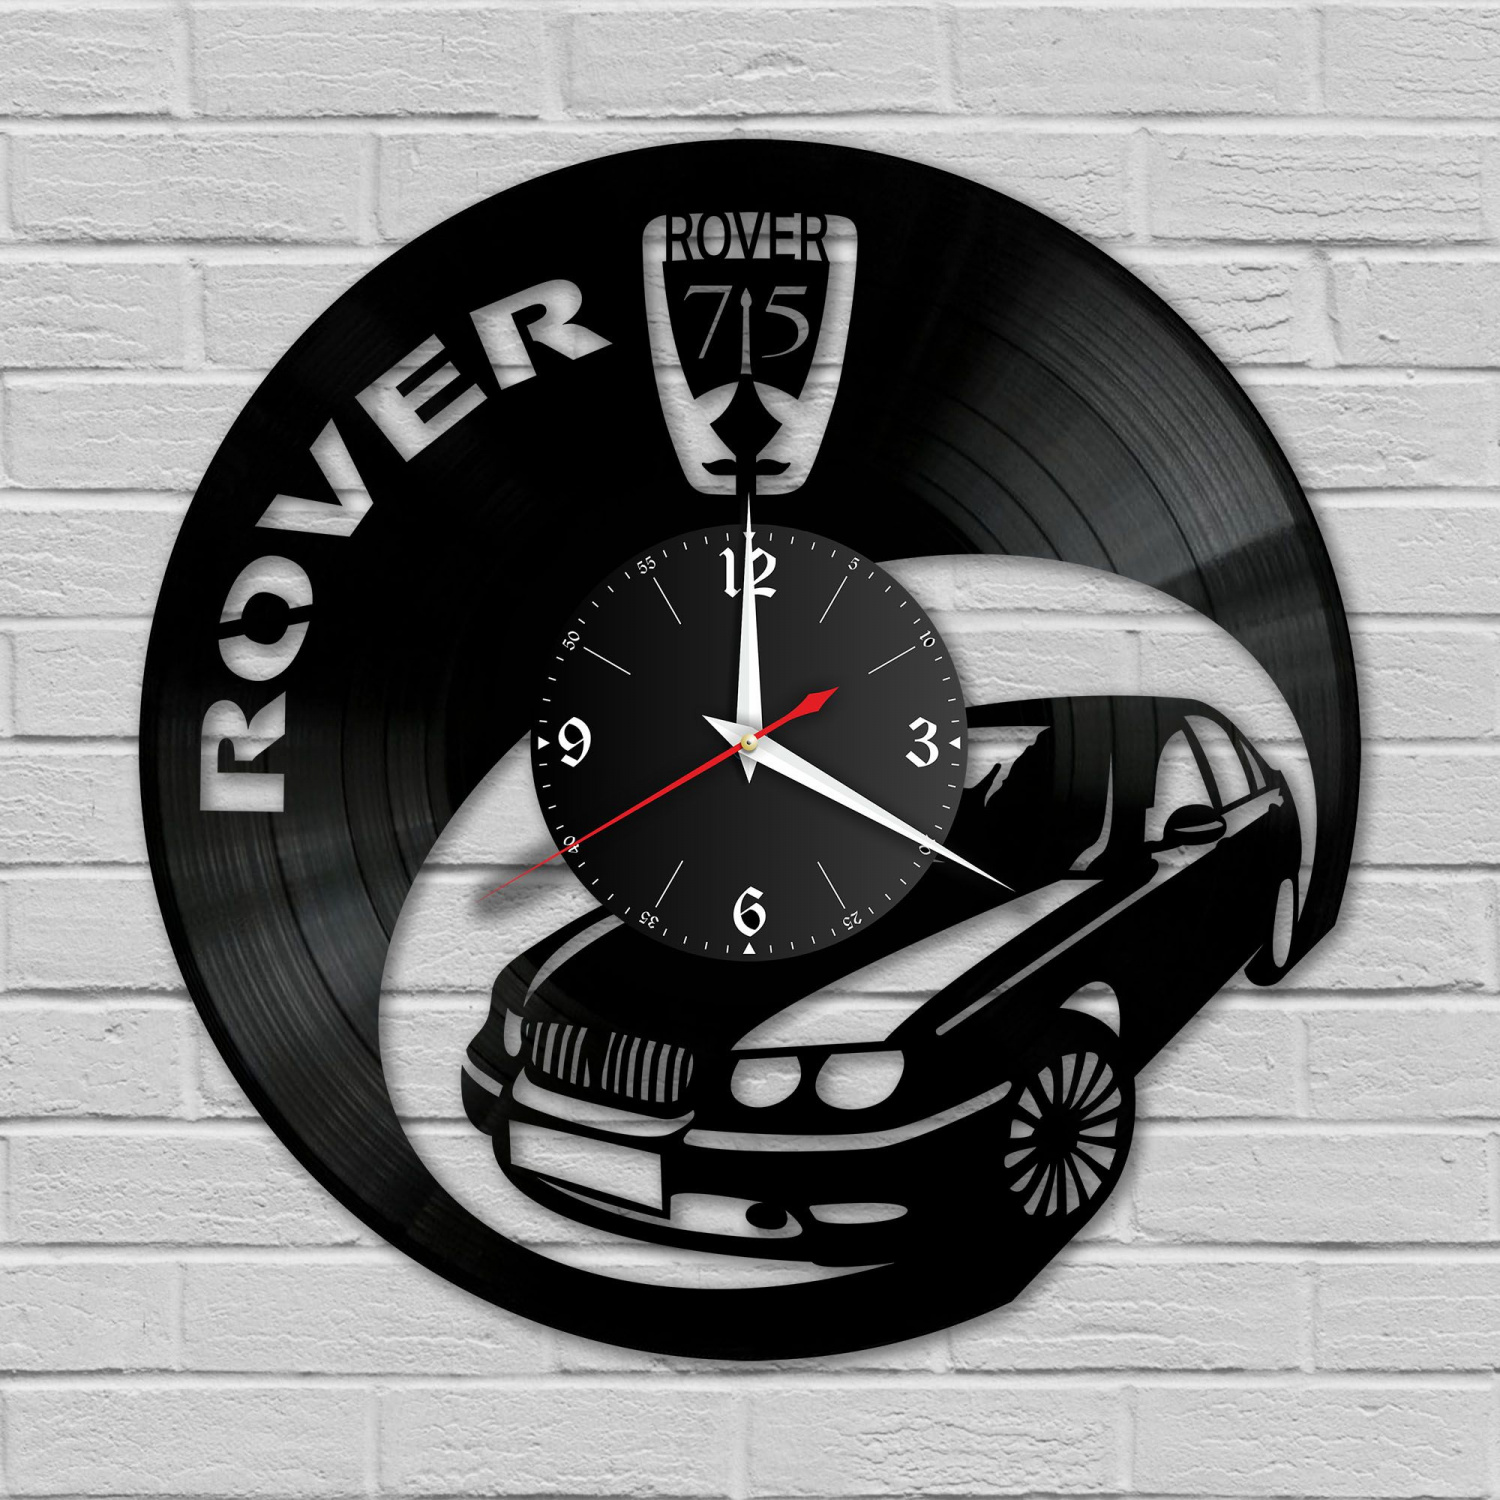 Часы настенные "Rover 75" из винила, №1 VC-10829